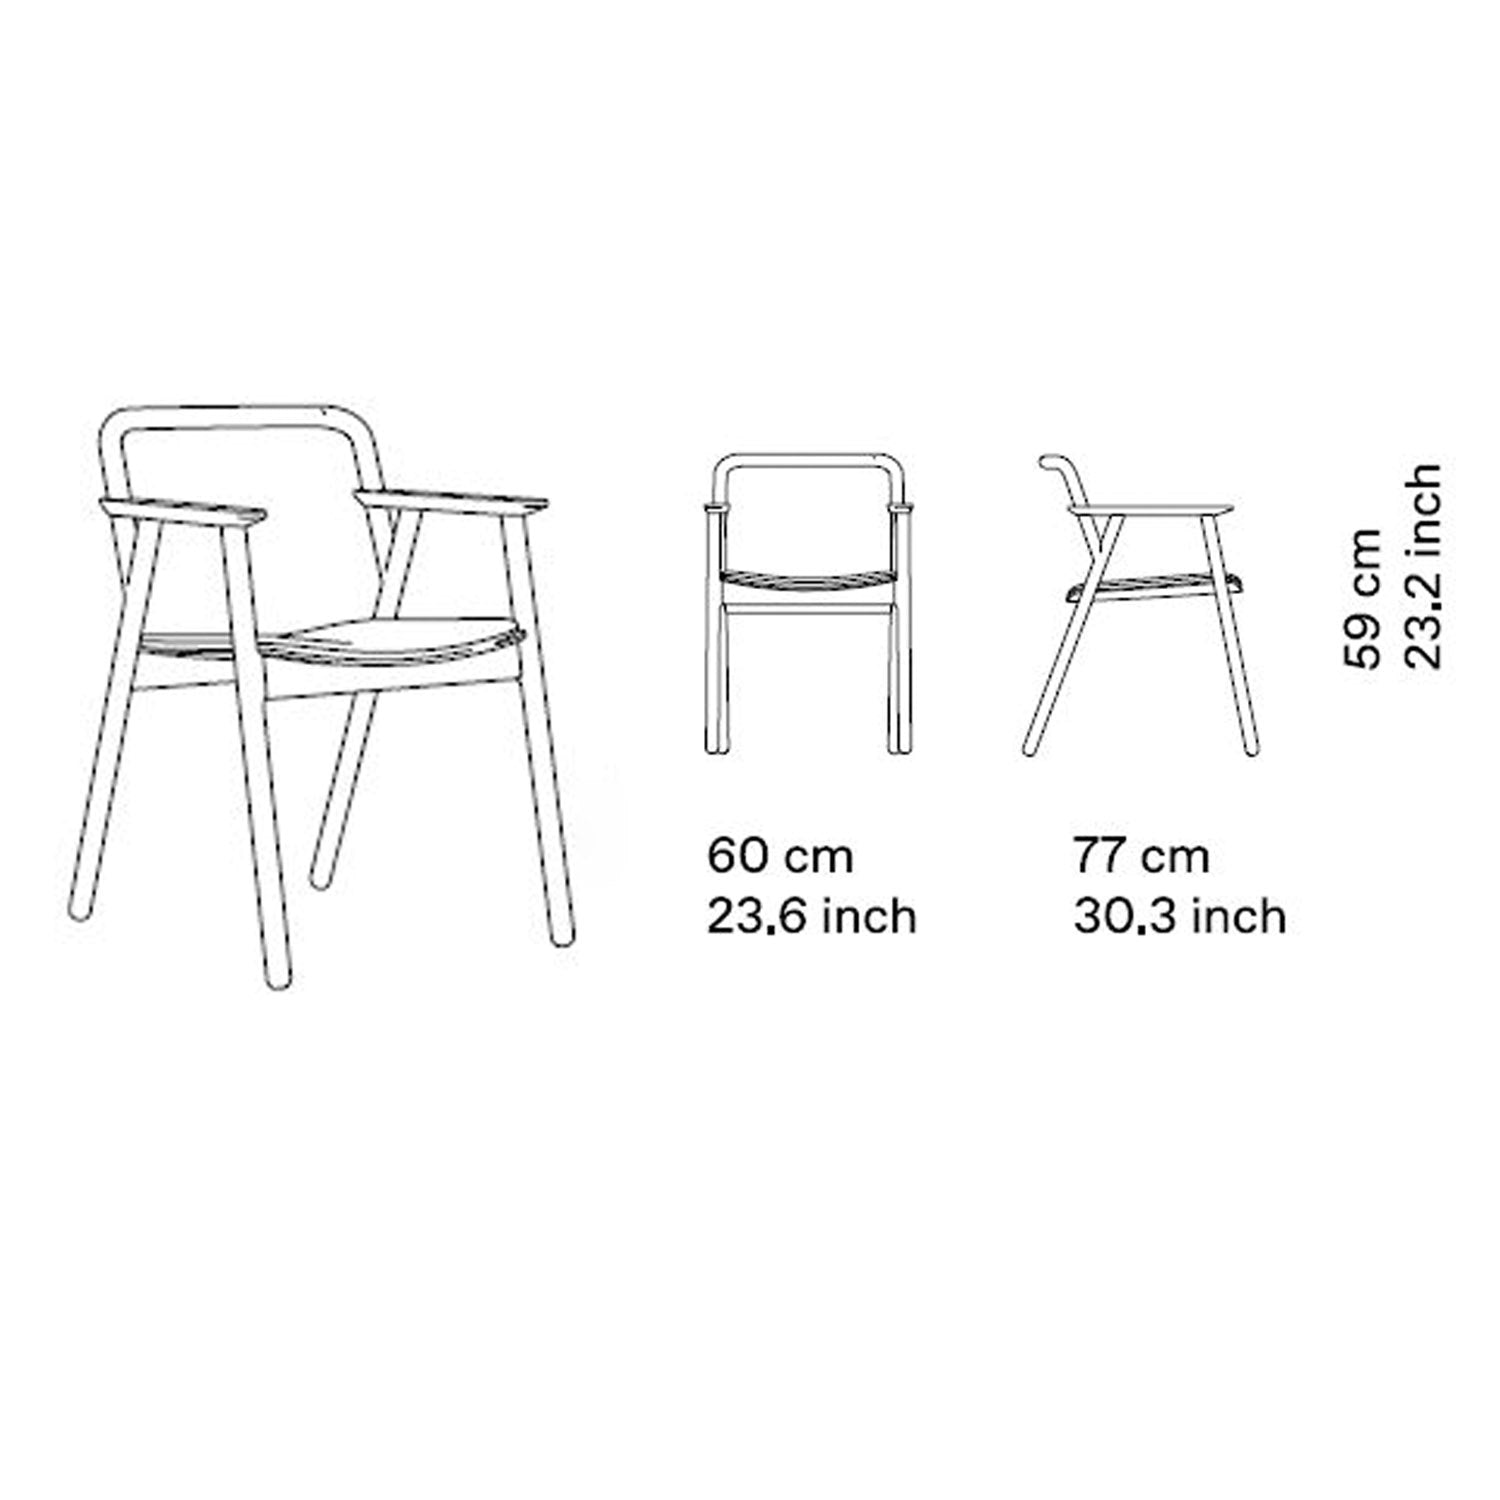 Chair SMOOTH - UKRAINIAN PRODUCT DESIGN